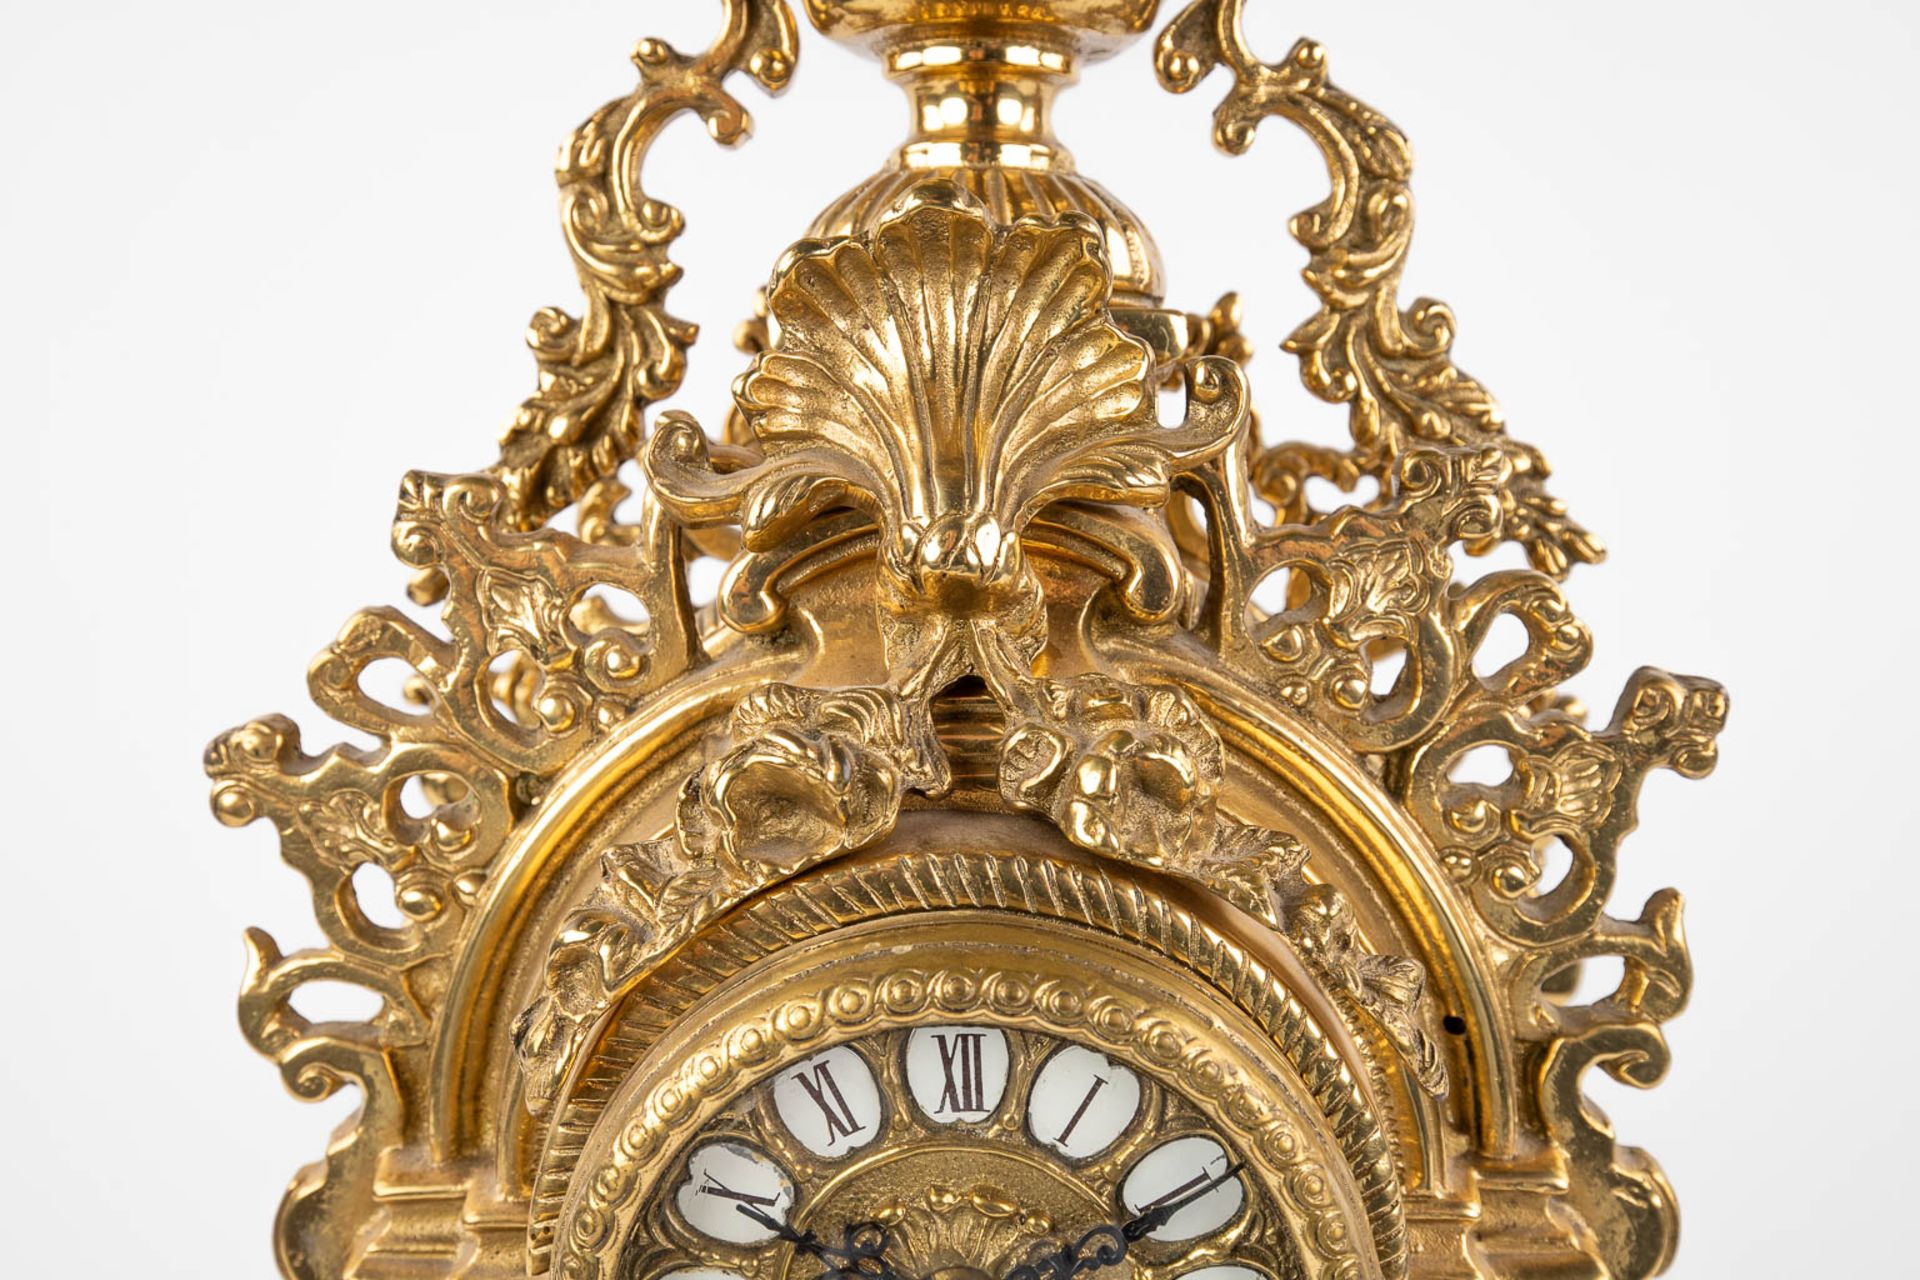 A three-piece mantle garniture clock and candelabra, bronze. 20th C. (D:16 x W:35 x H:62 cm) - Image 13 of 16